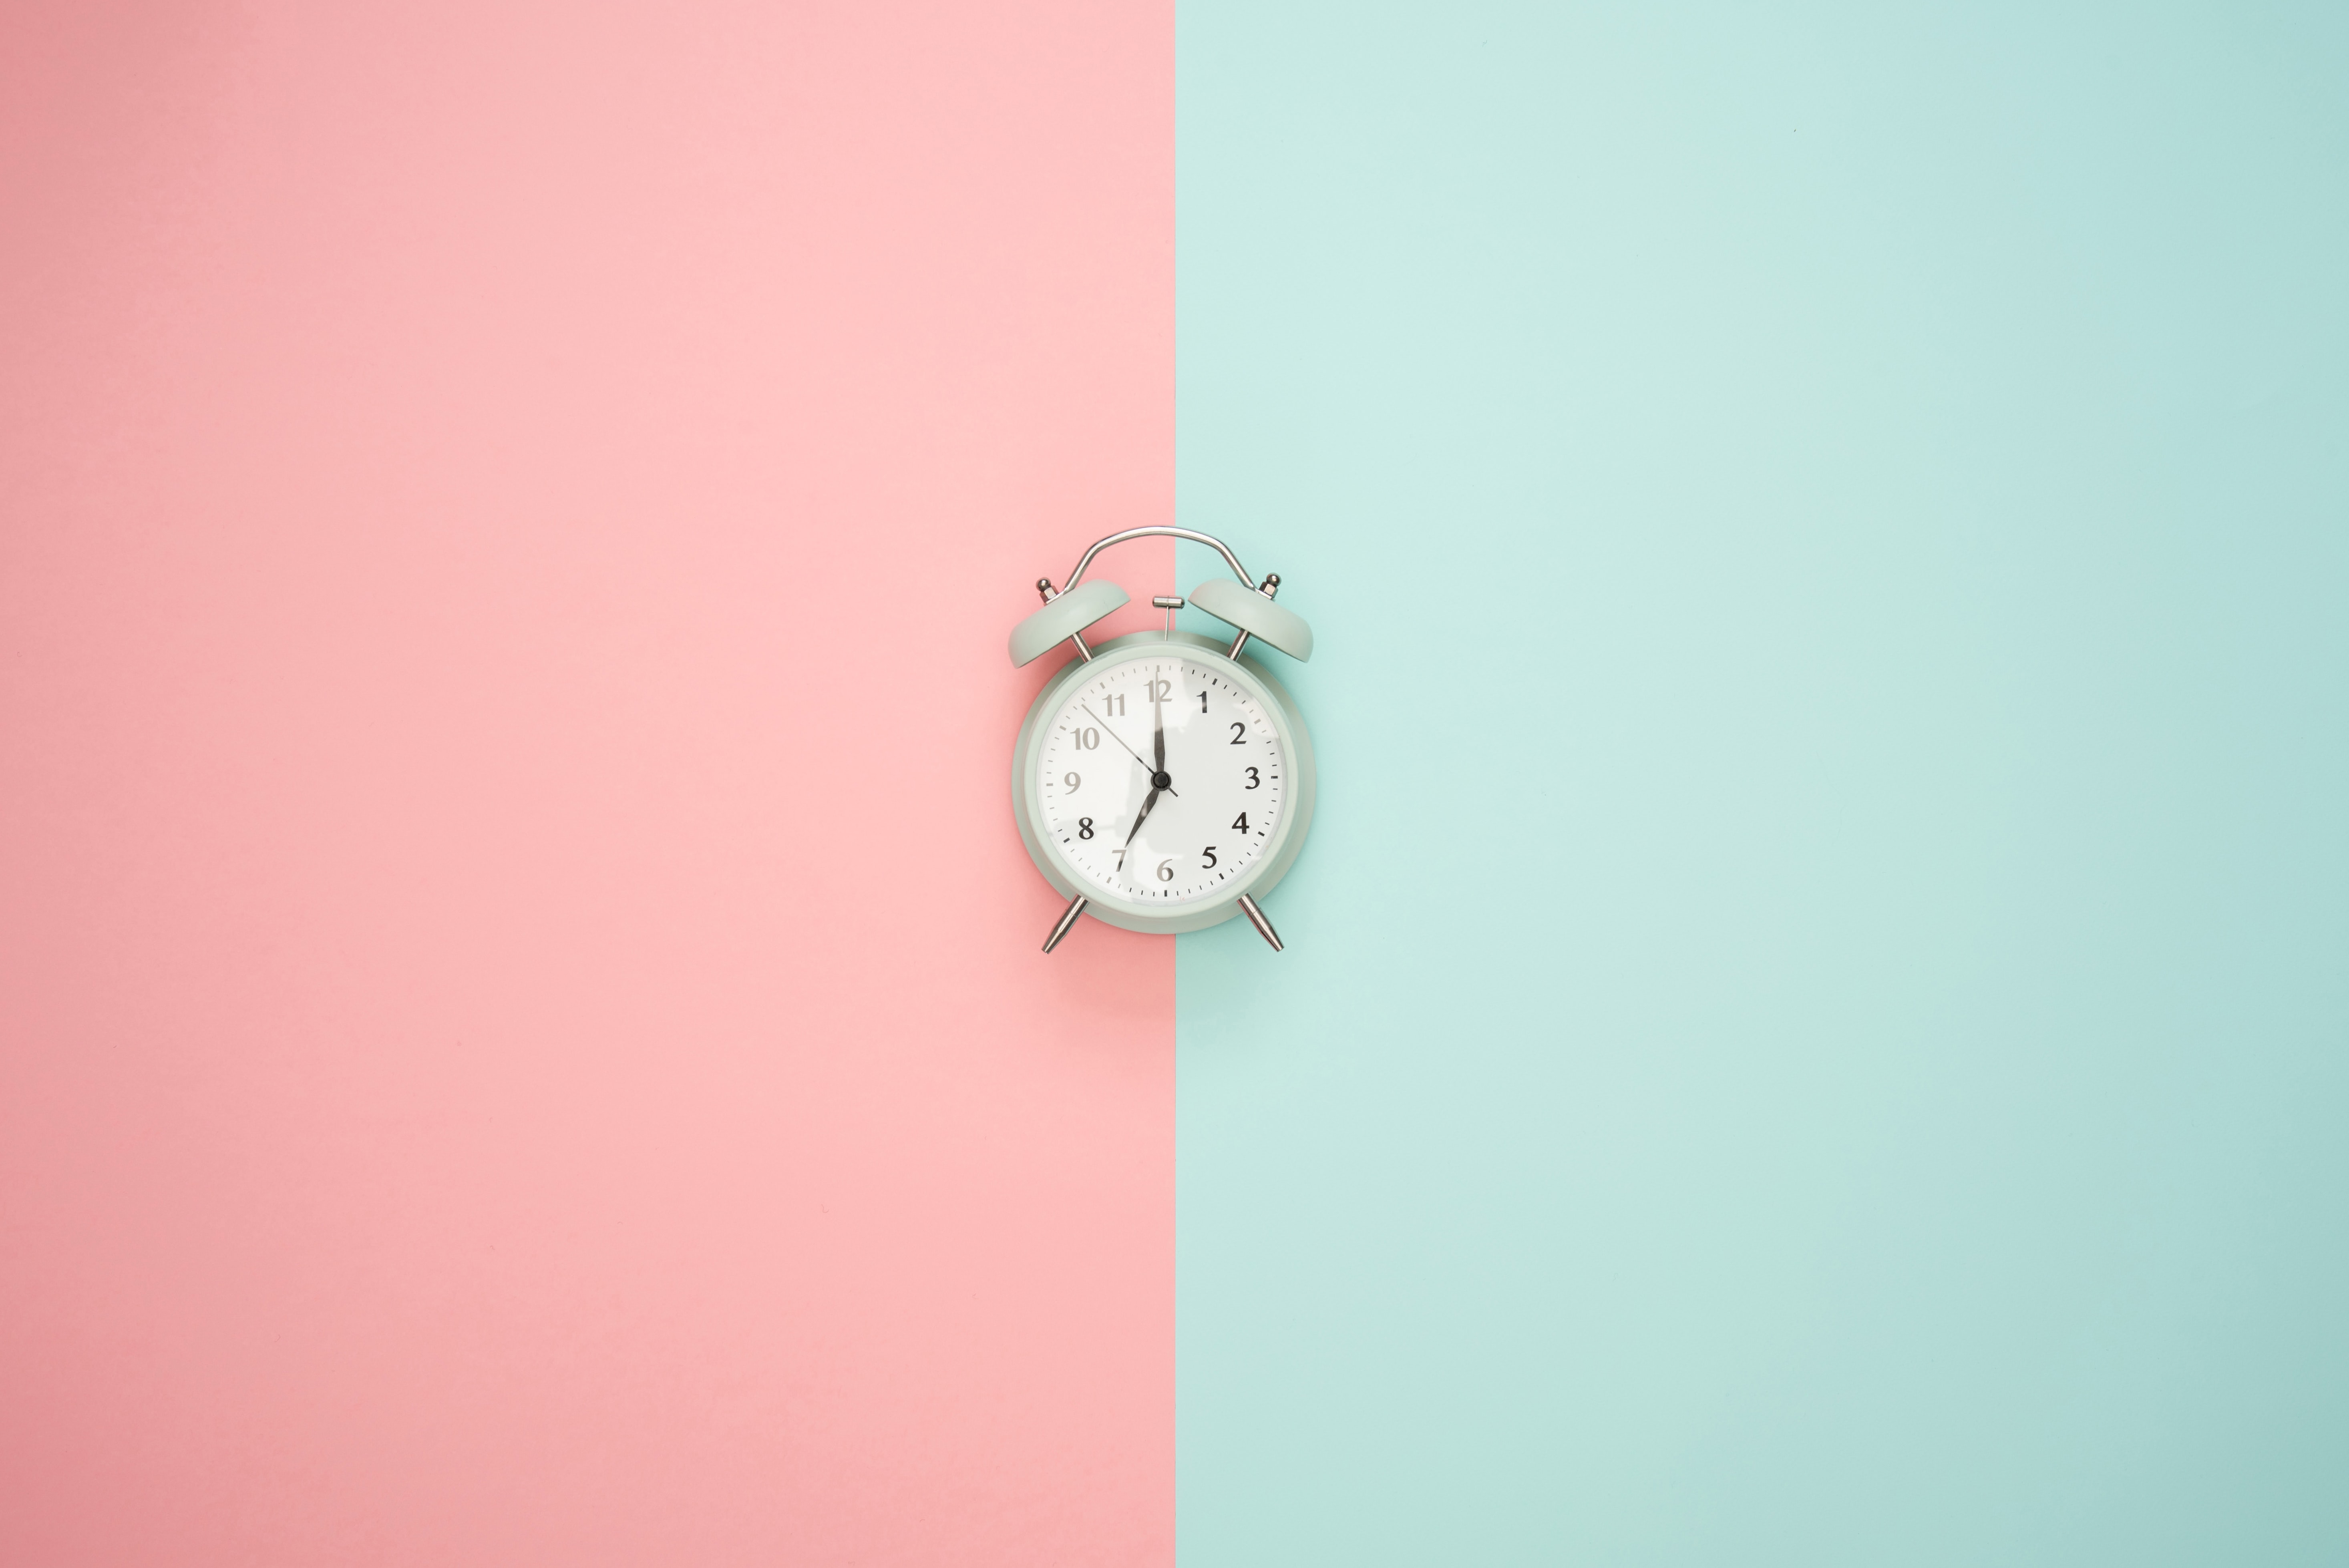 clock wallpaper hd,analog watch,pink,watch,turquoise,clock